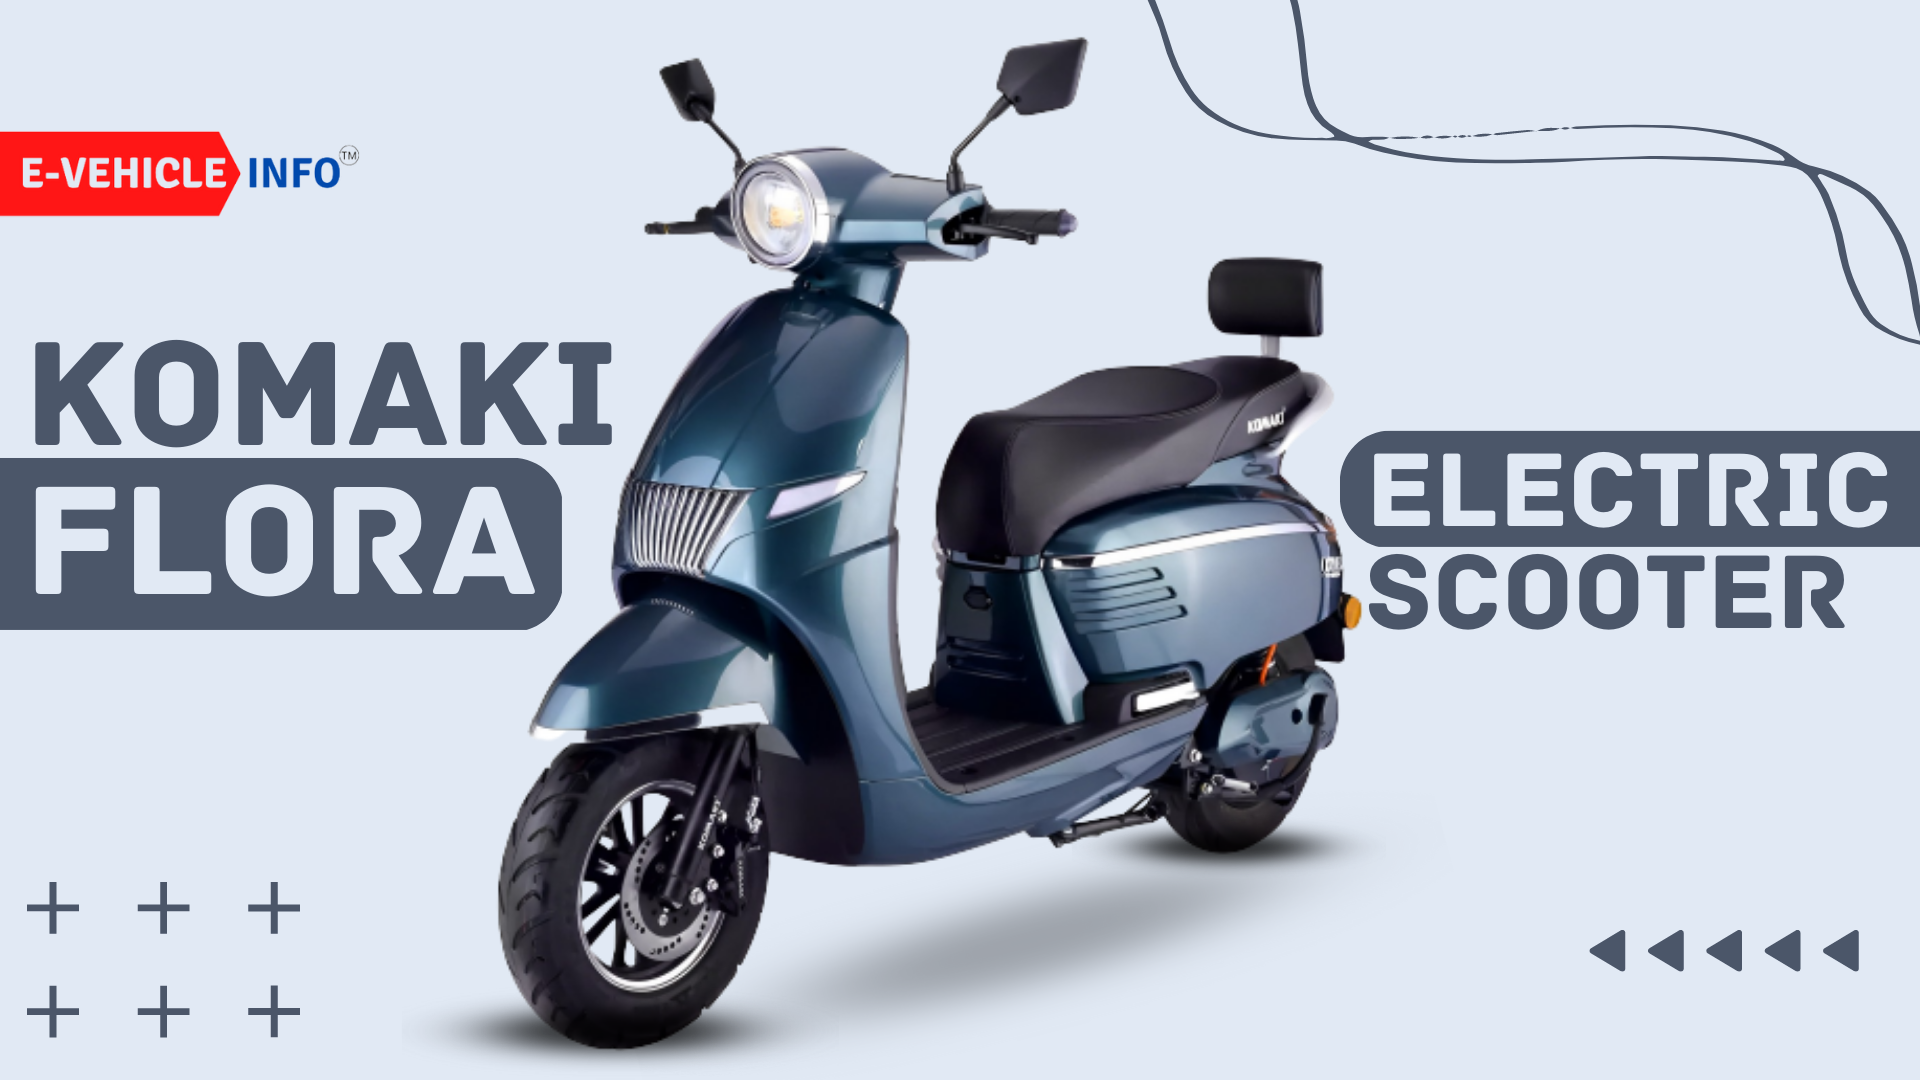 https://e-vehicleinfo.com/komaki-flora-electric-scooter-price-range-specifications/